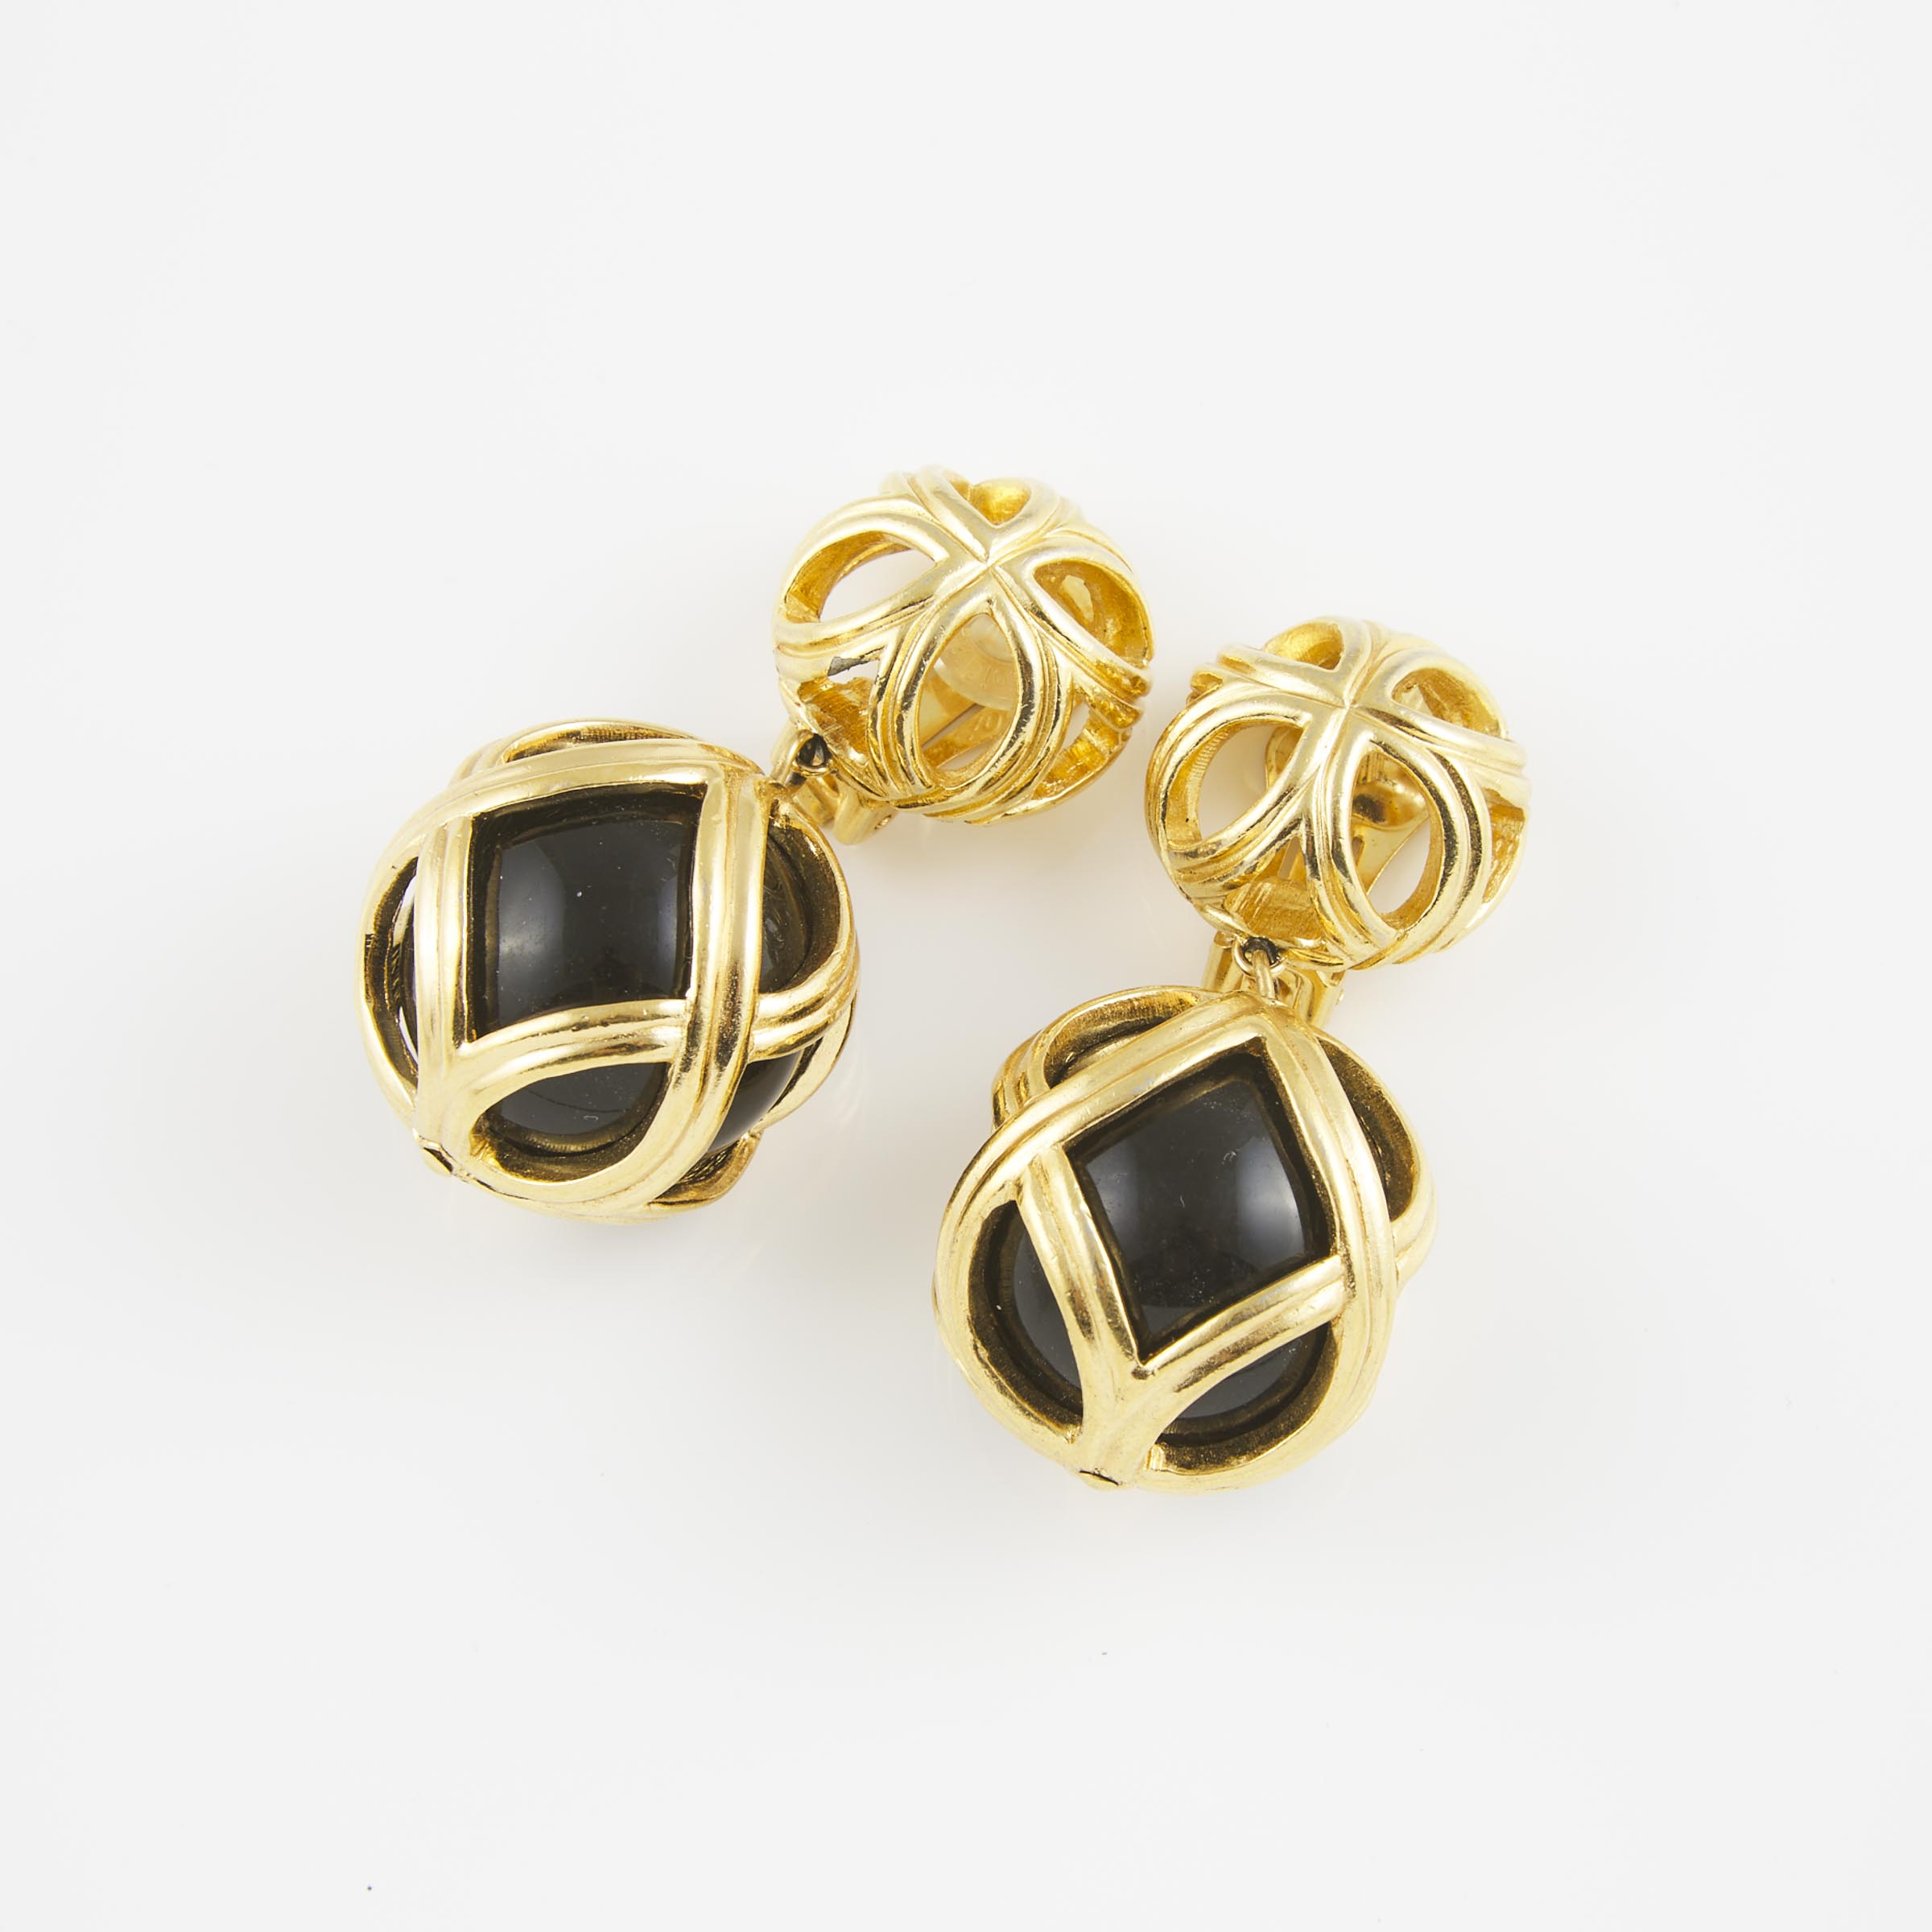 Pair Of Christian Dior Gold-Tone Metal Clipback Earrings